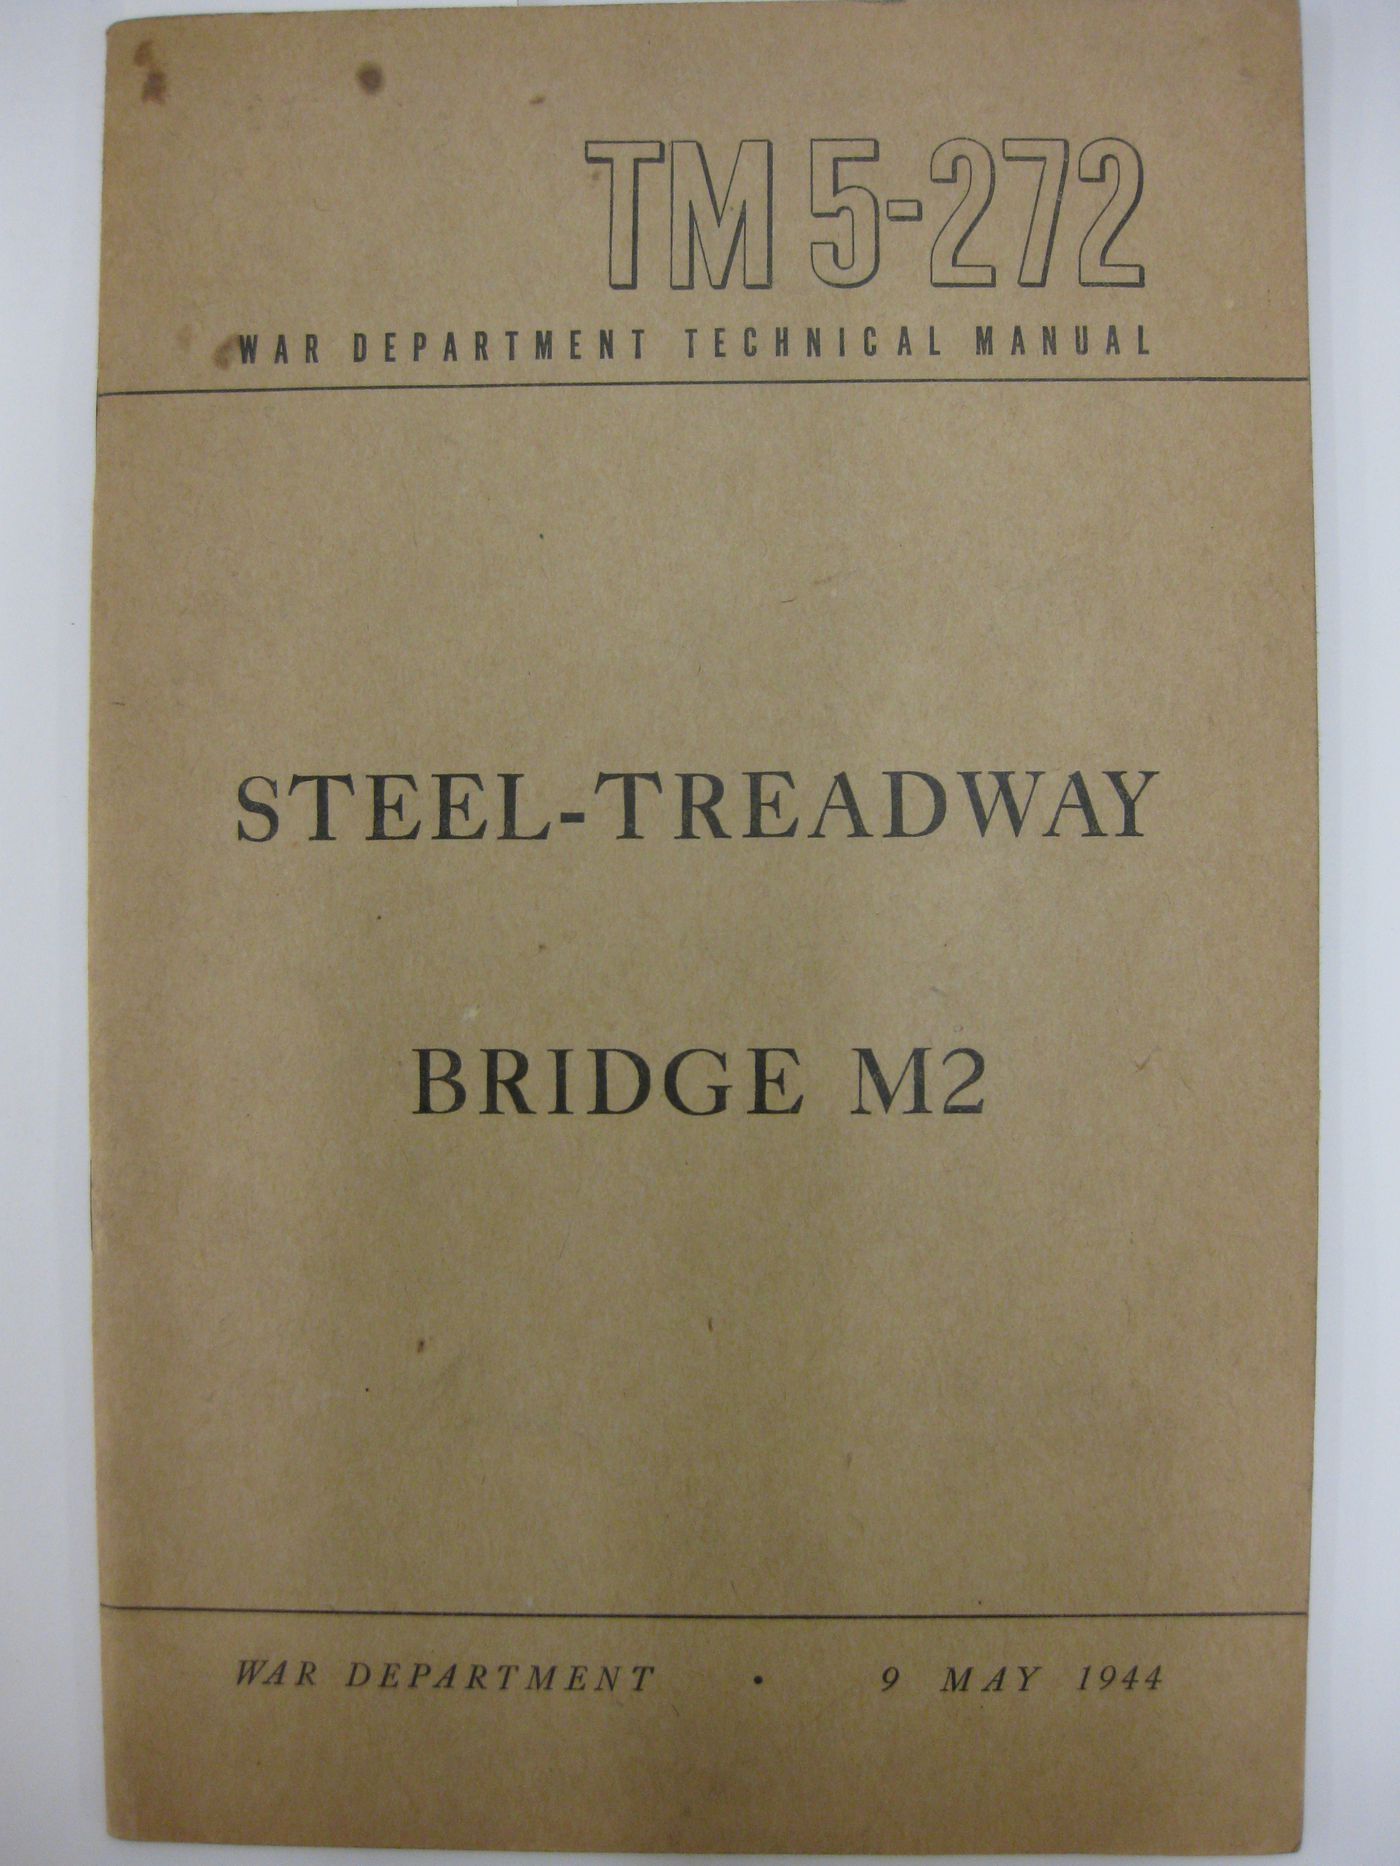 TM 5-272 Steel-Treadway Bridge M2